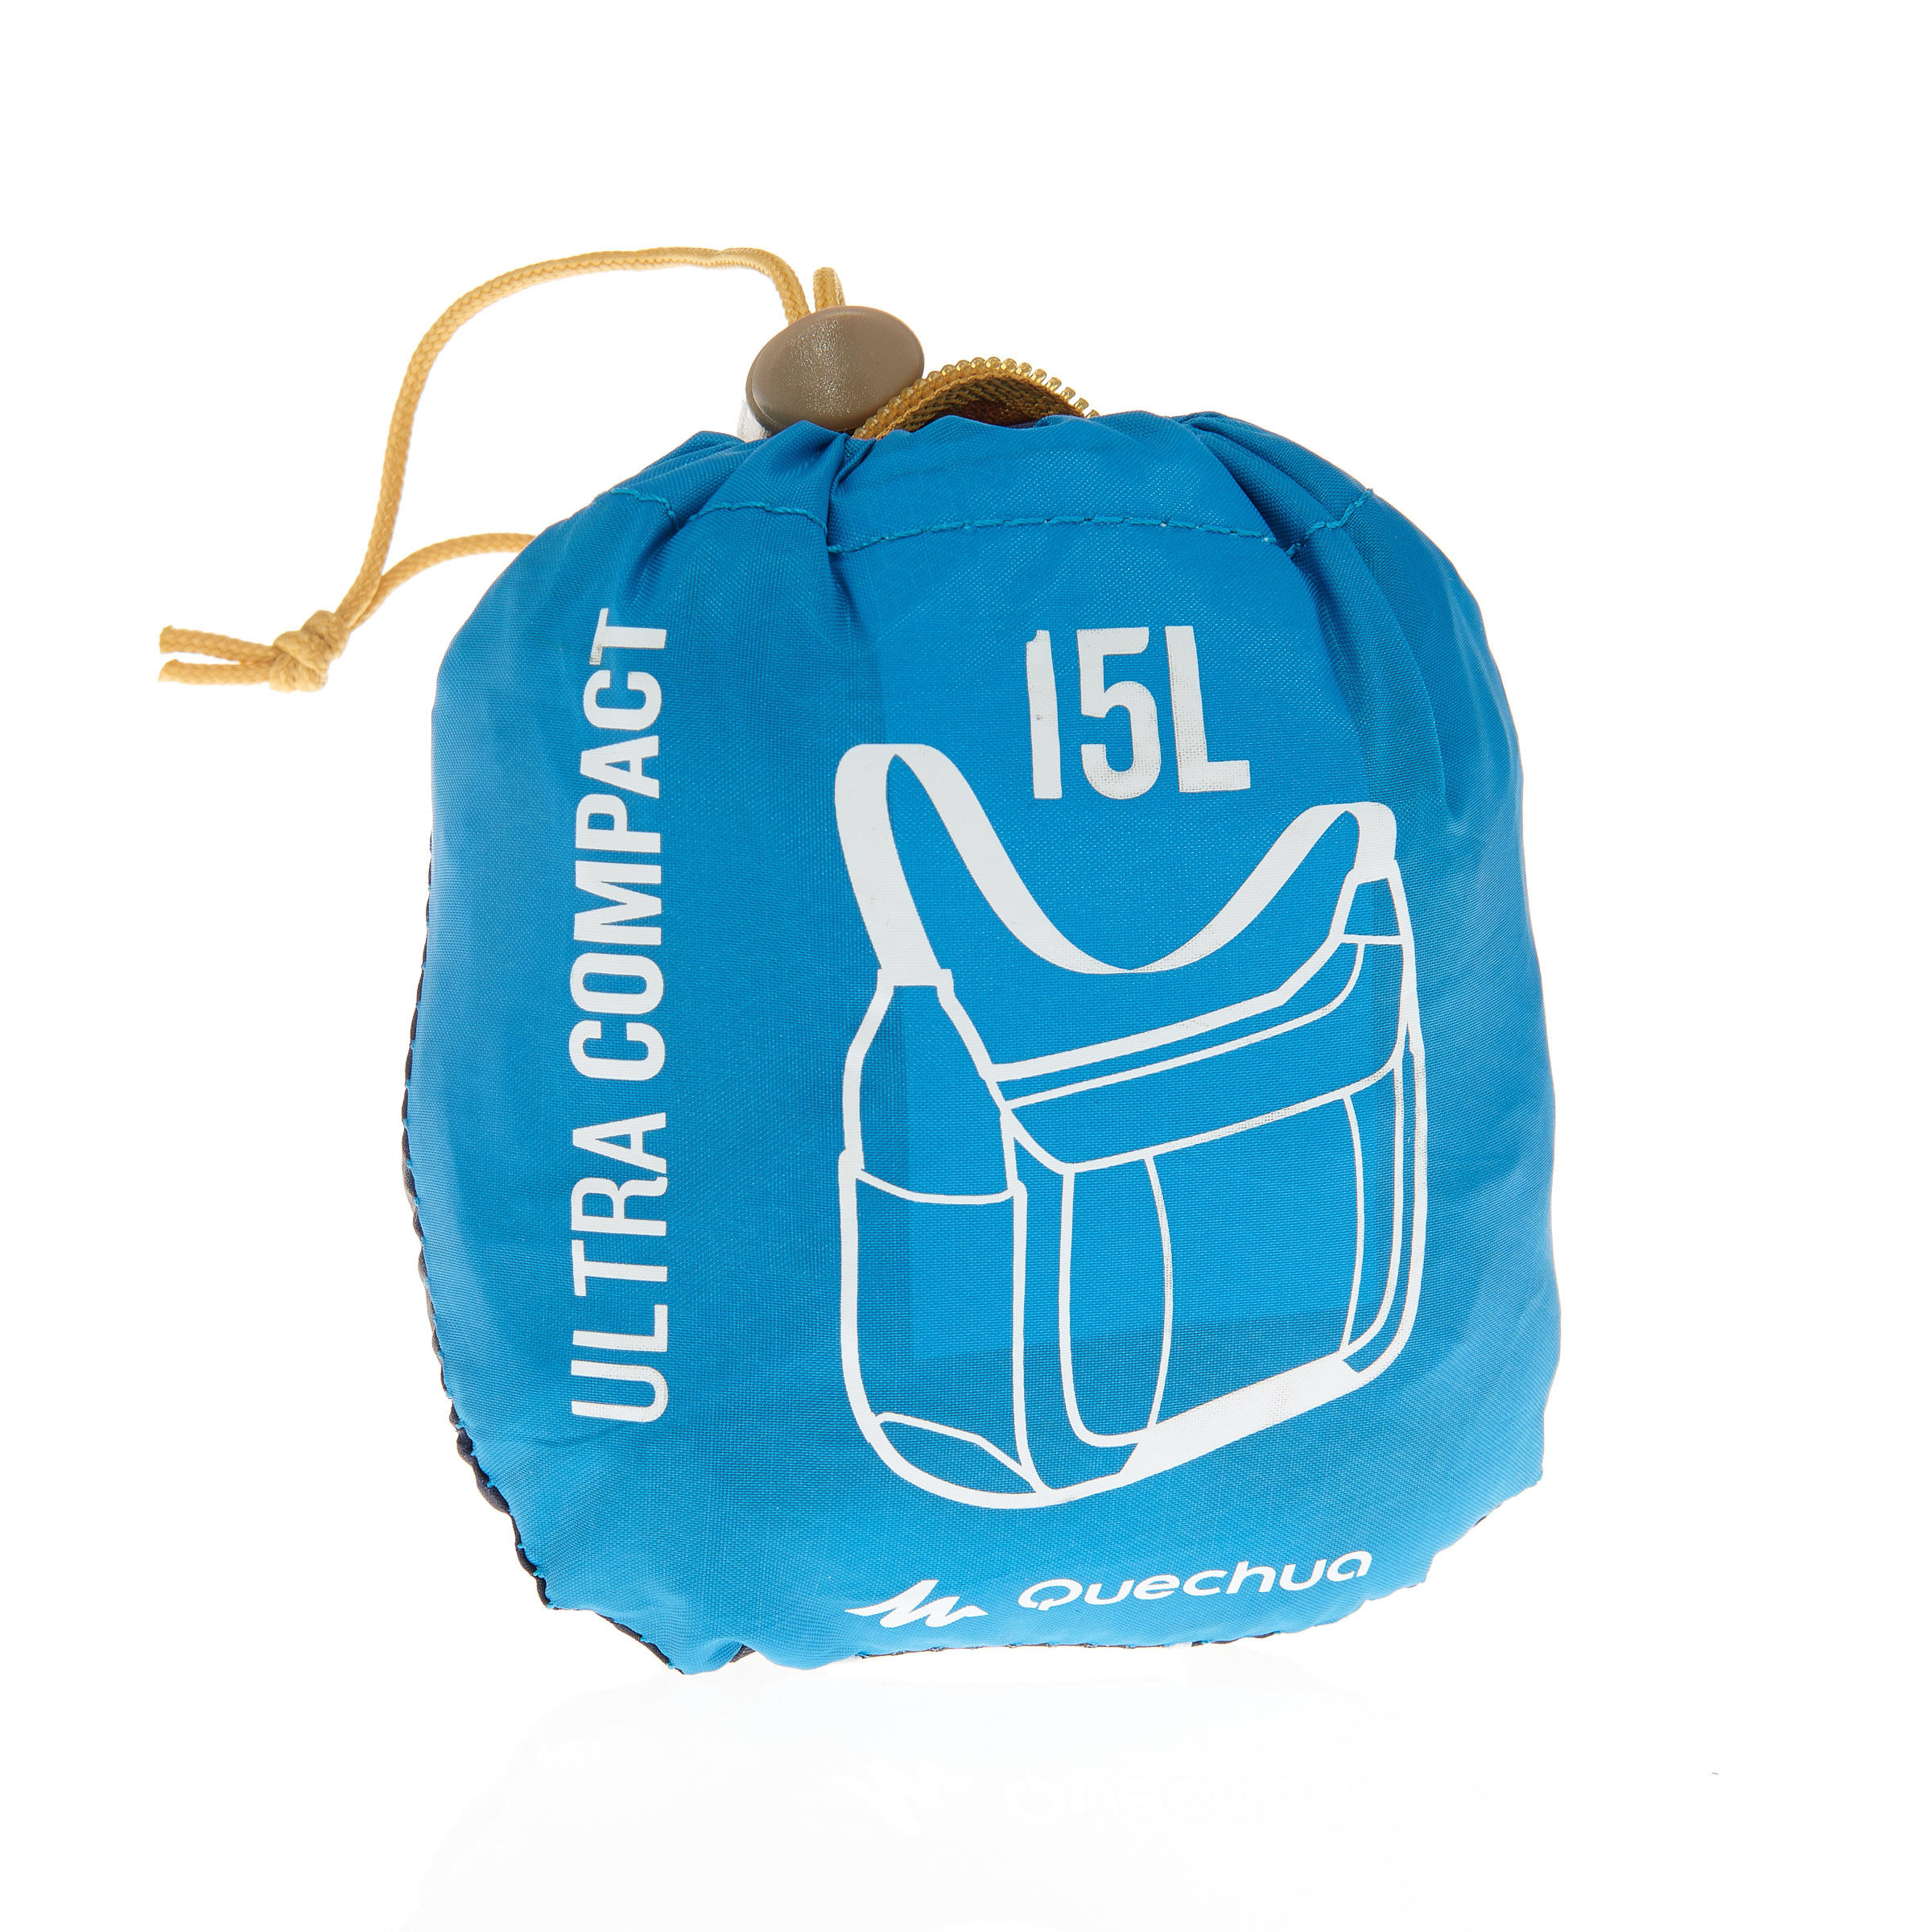 Travel Ultra-compact Messenger Bag - Blue 4/18